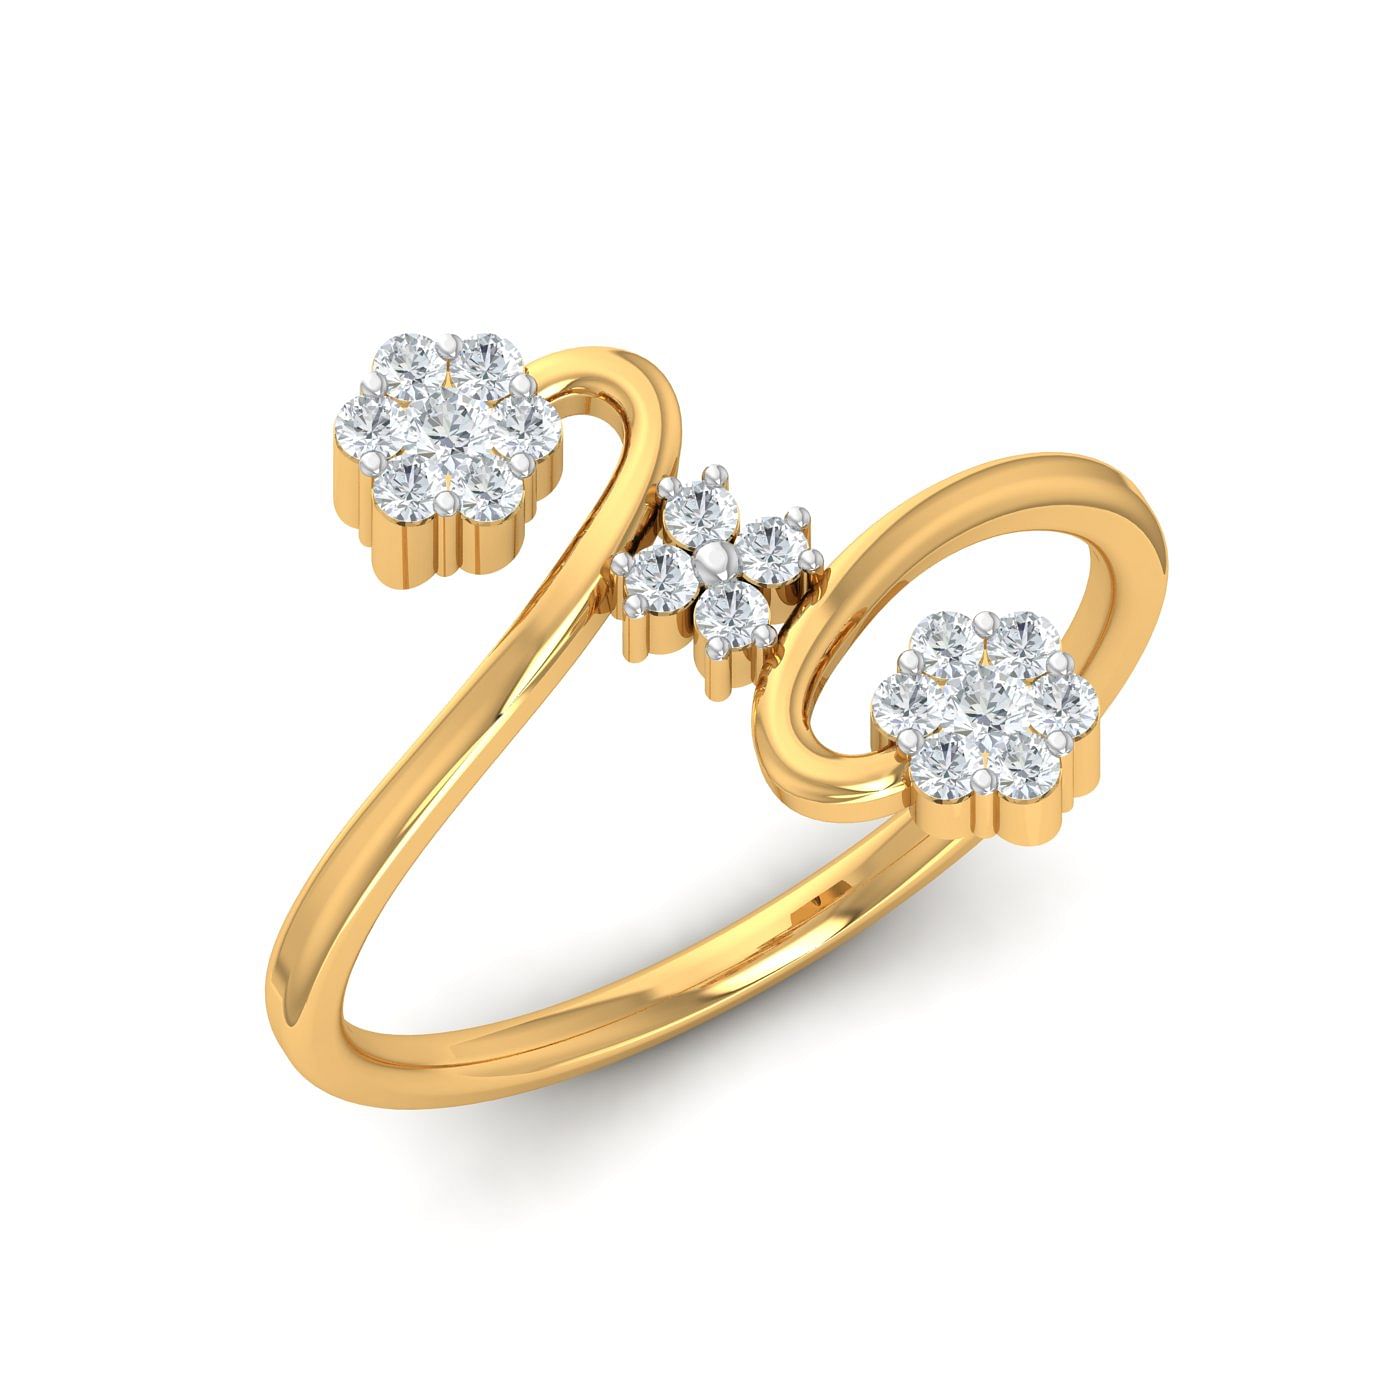 Three Flower Design Diamond Ring With Yellow Gold